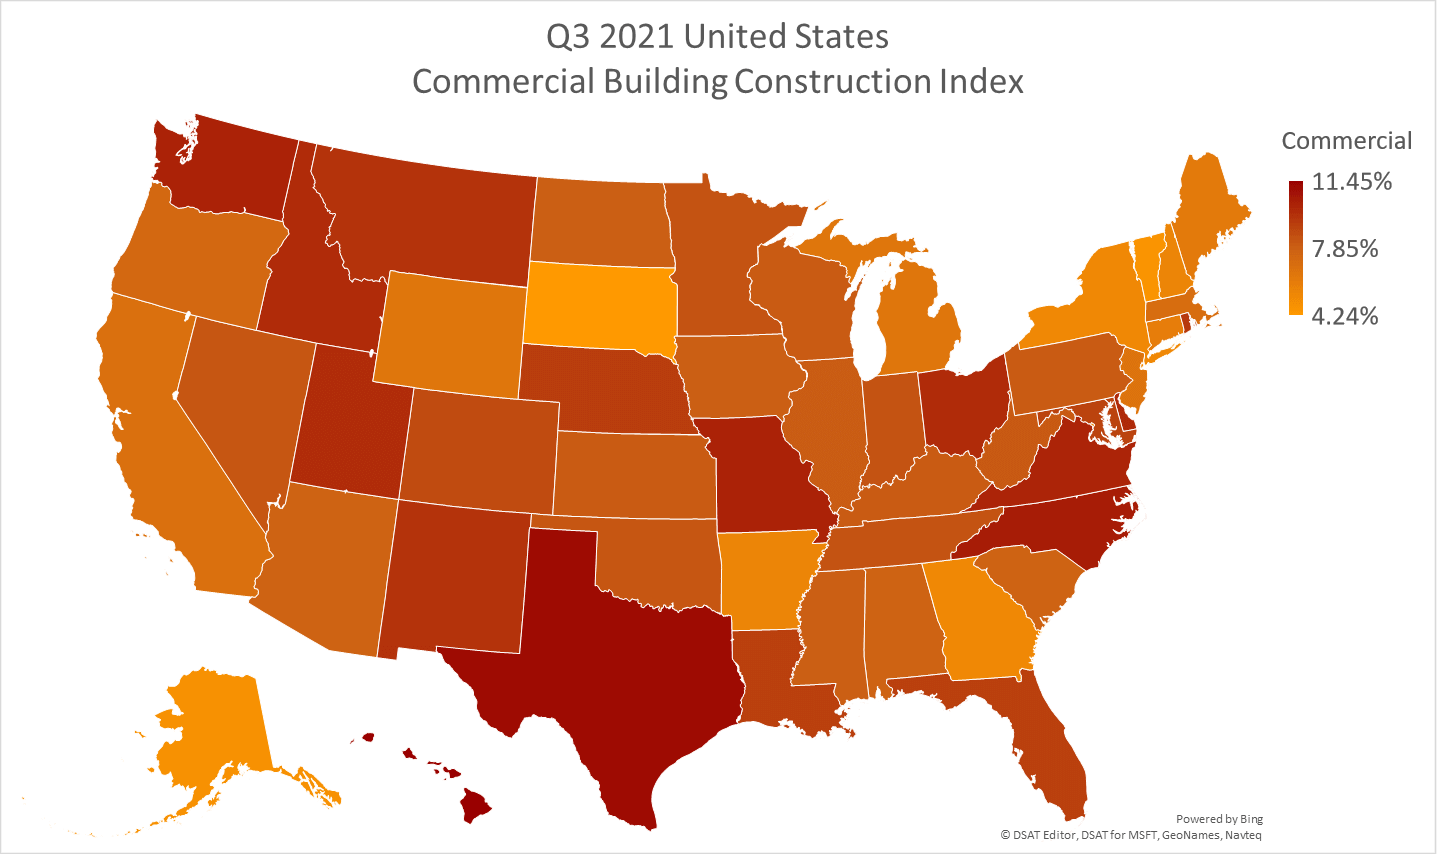 Q3 2021 US Commercial Building Construction Index